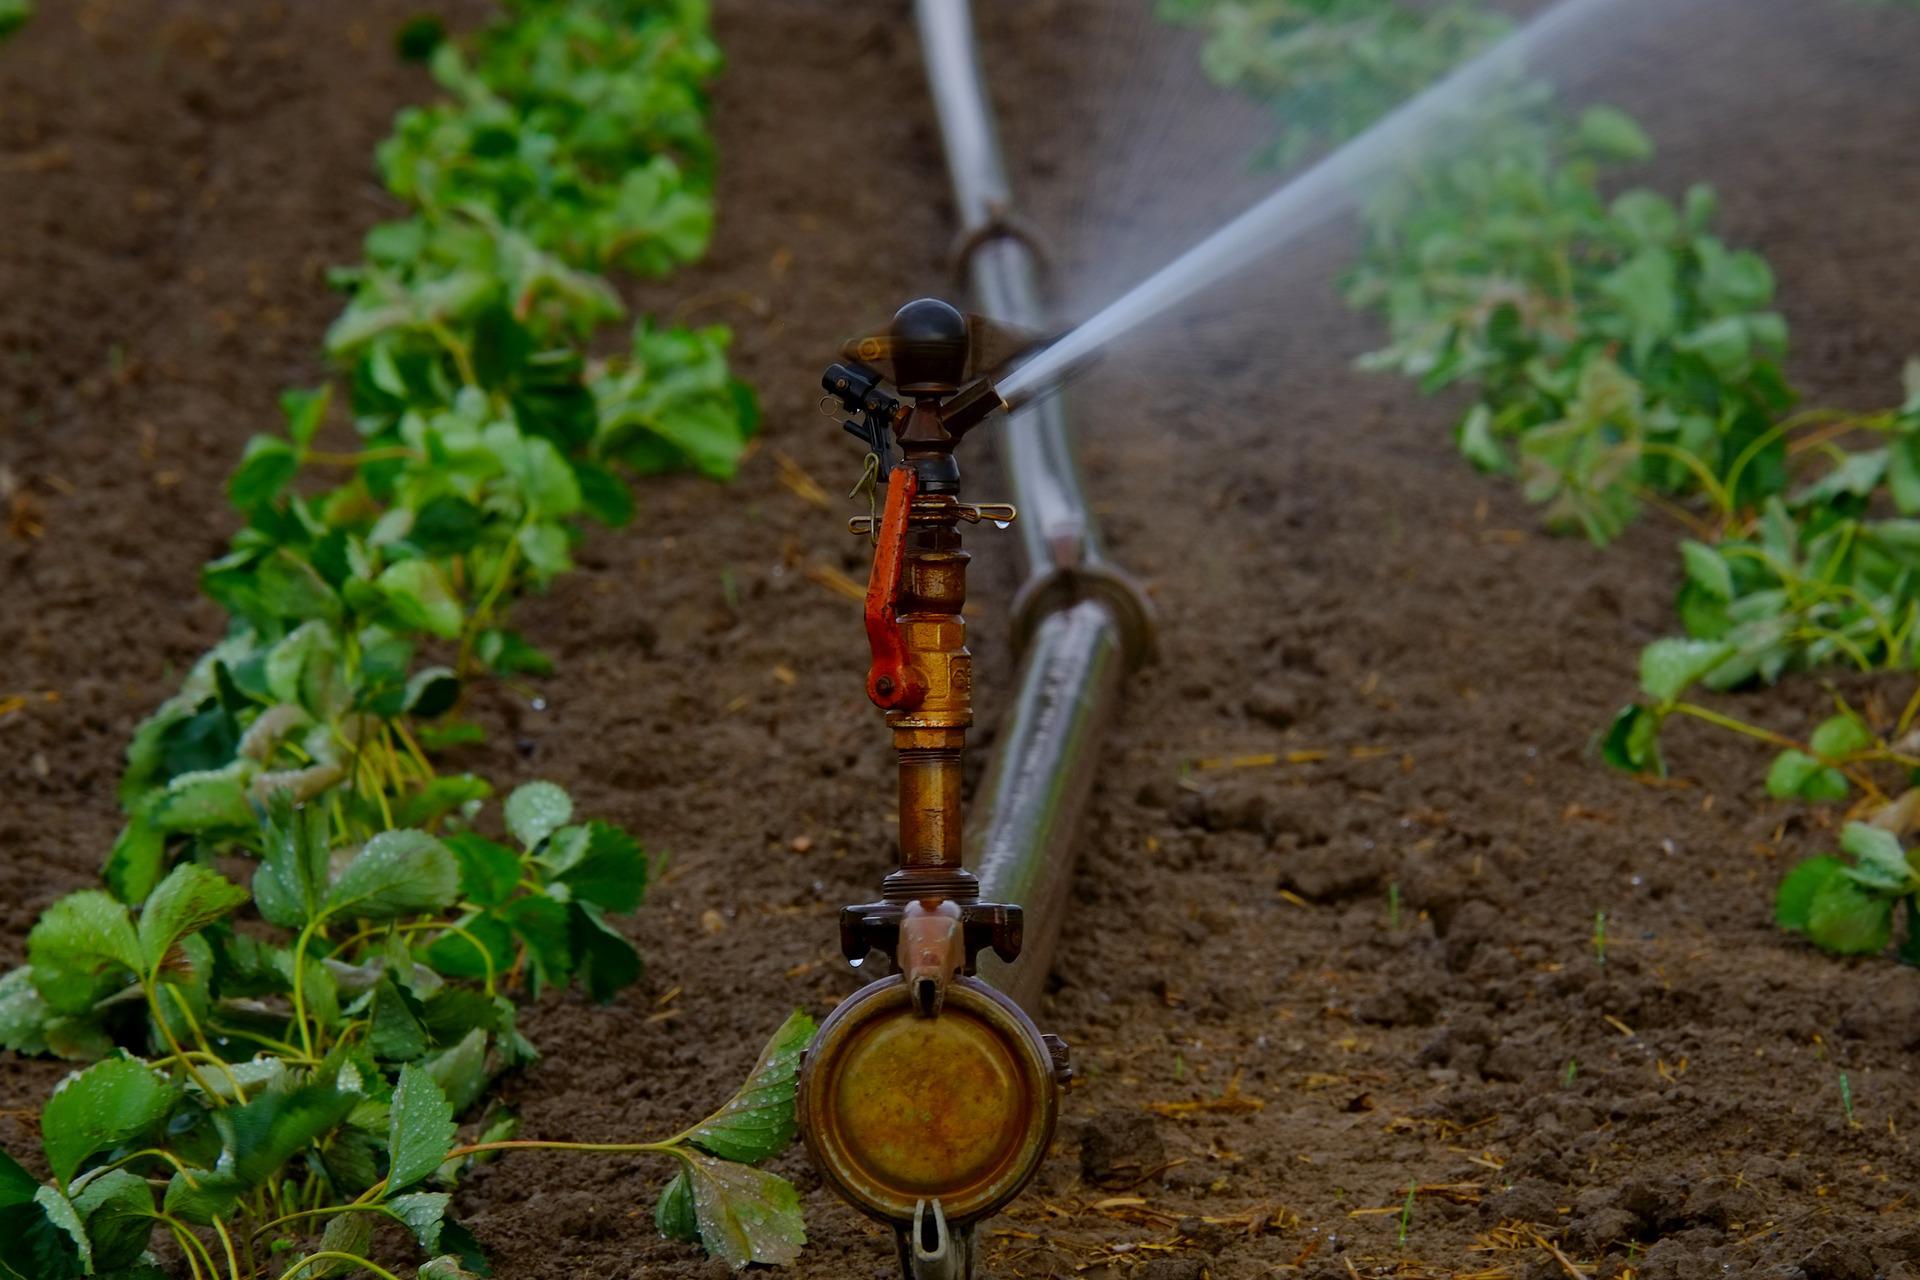 Farming Irrigation